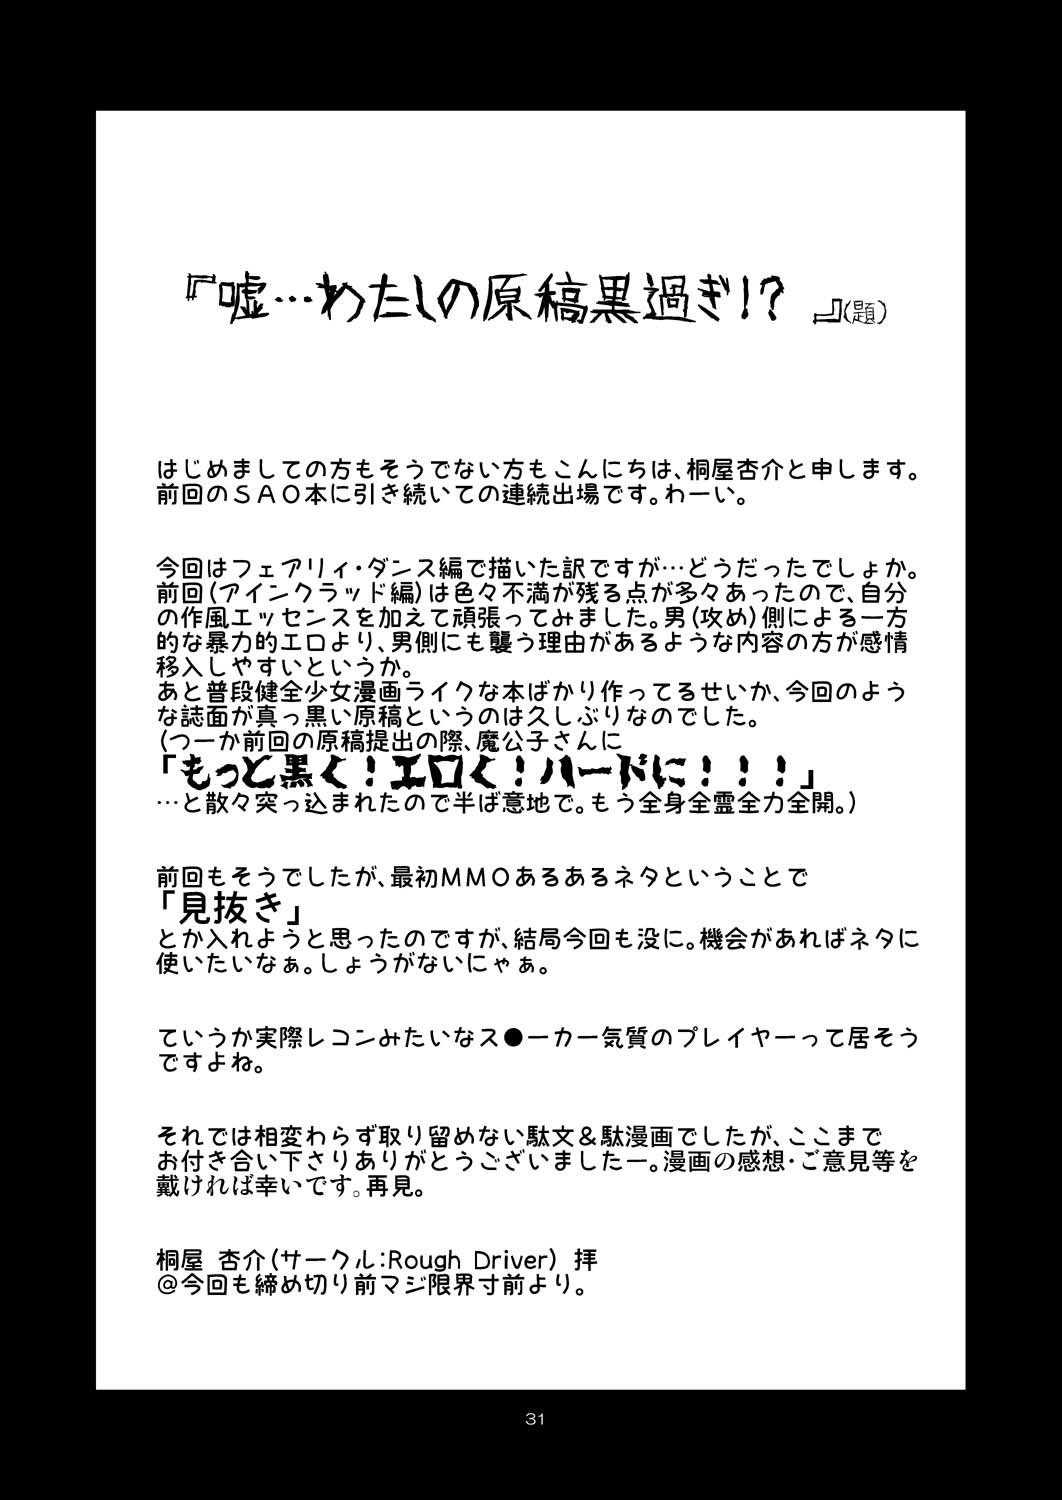 [RED RIBBON REVENGER (魔公子)] Confession (ソードアート・オンライン) [DL版]